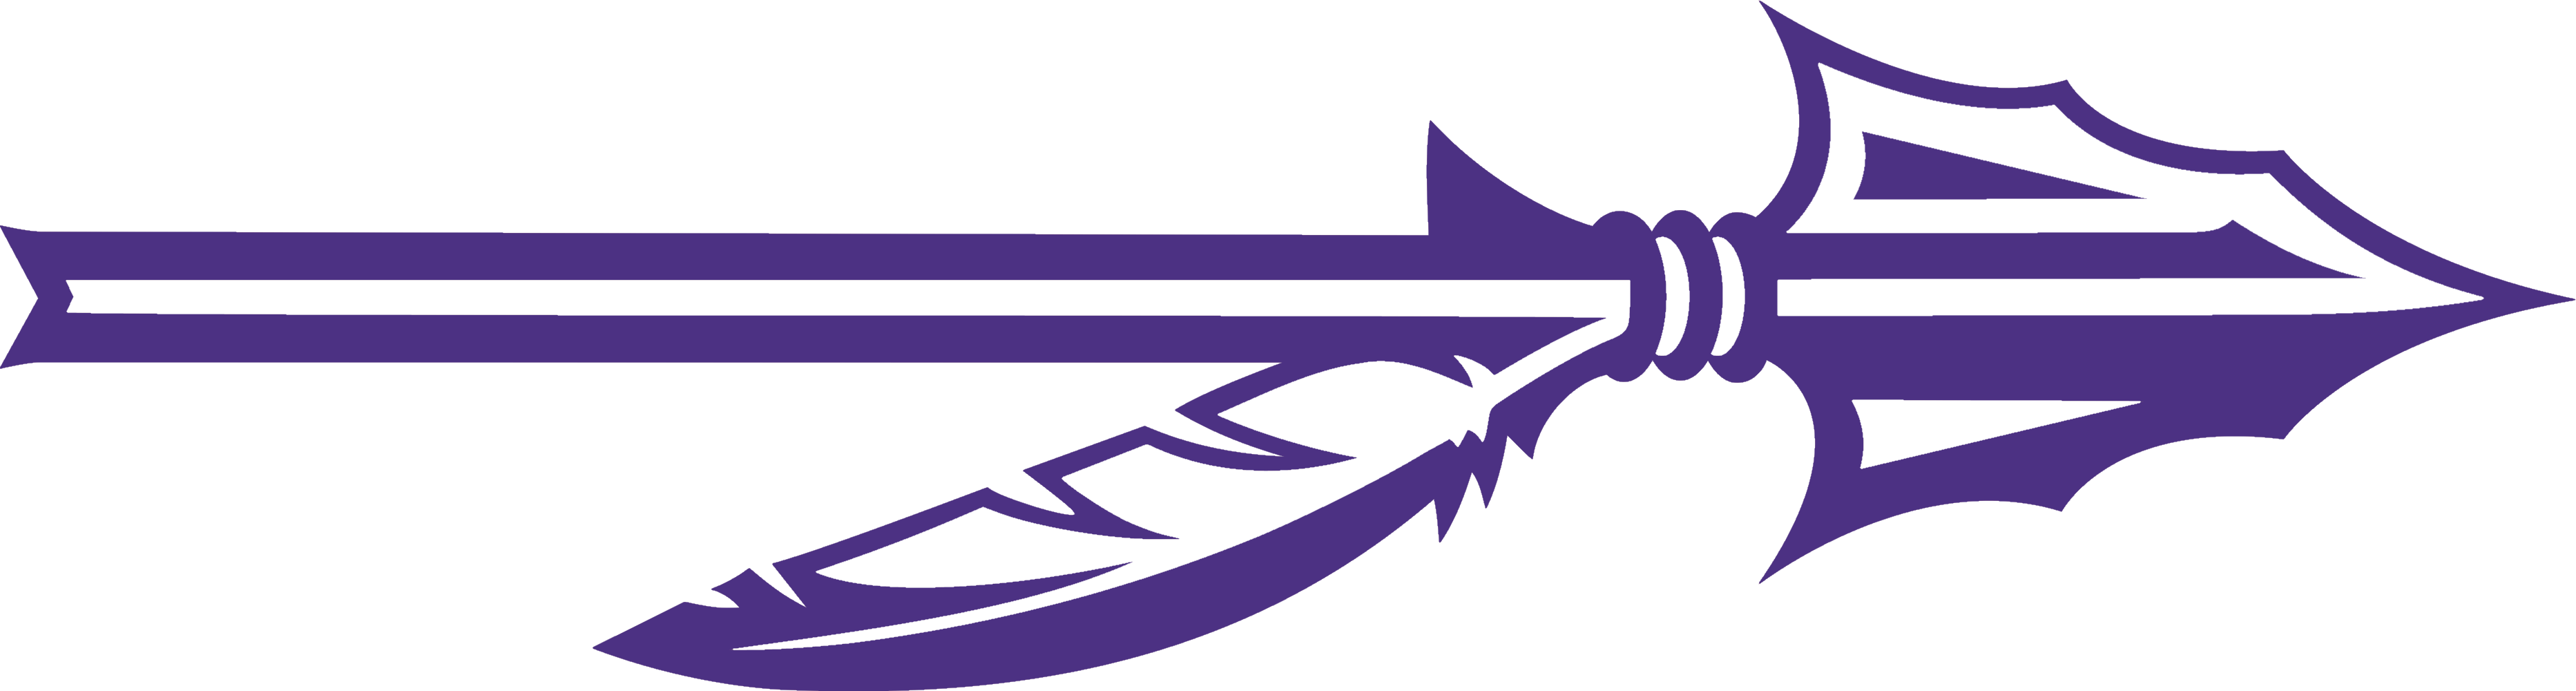 Indian Spear Football Logo - Indian Spear Football Logo Vector Online 2019